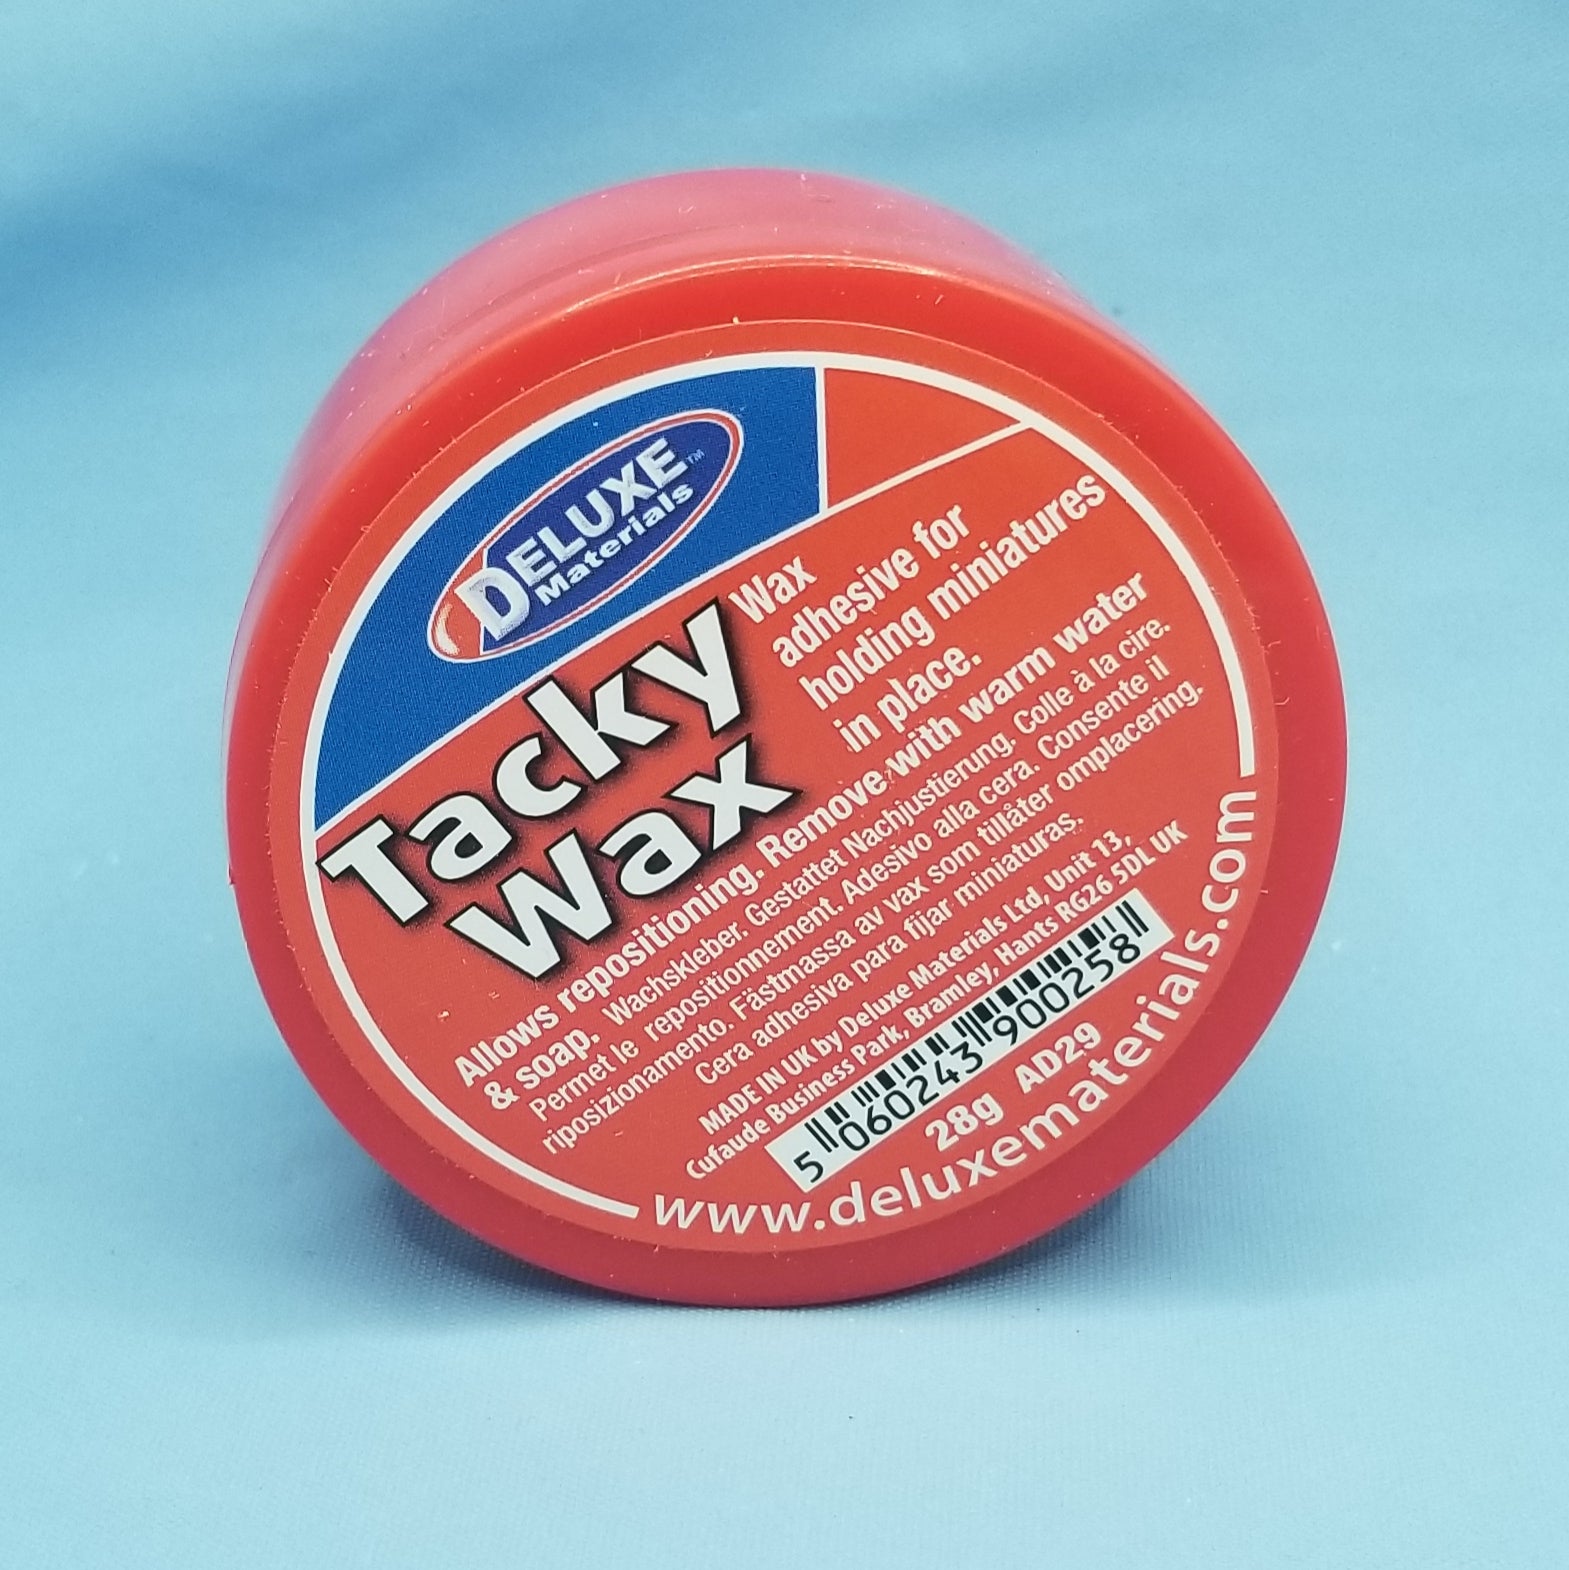 Tacky Wax - Temporary Adhesive